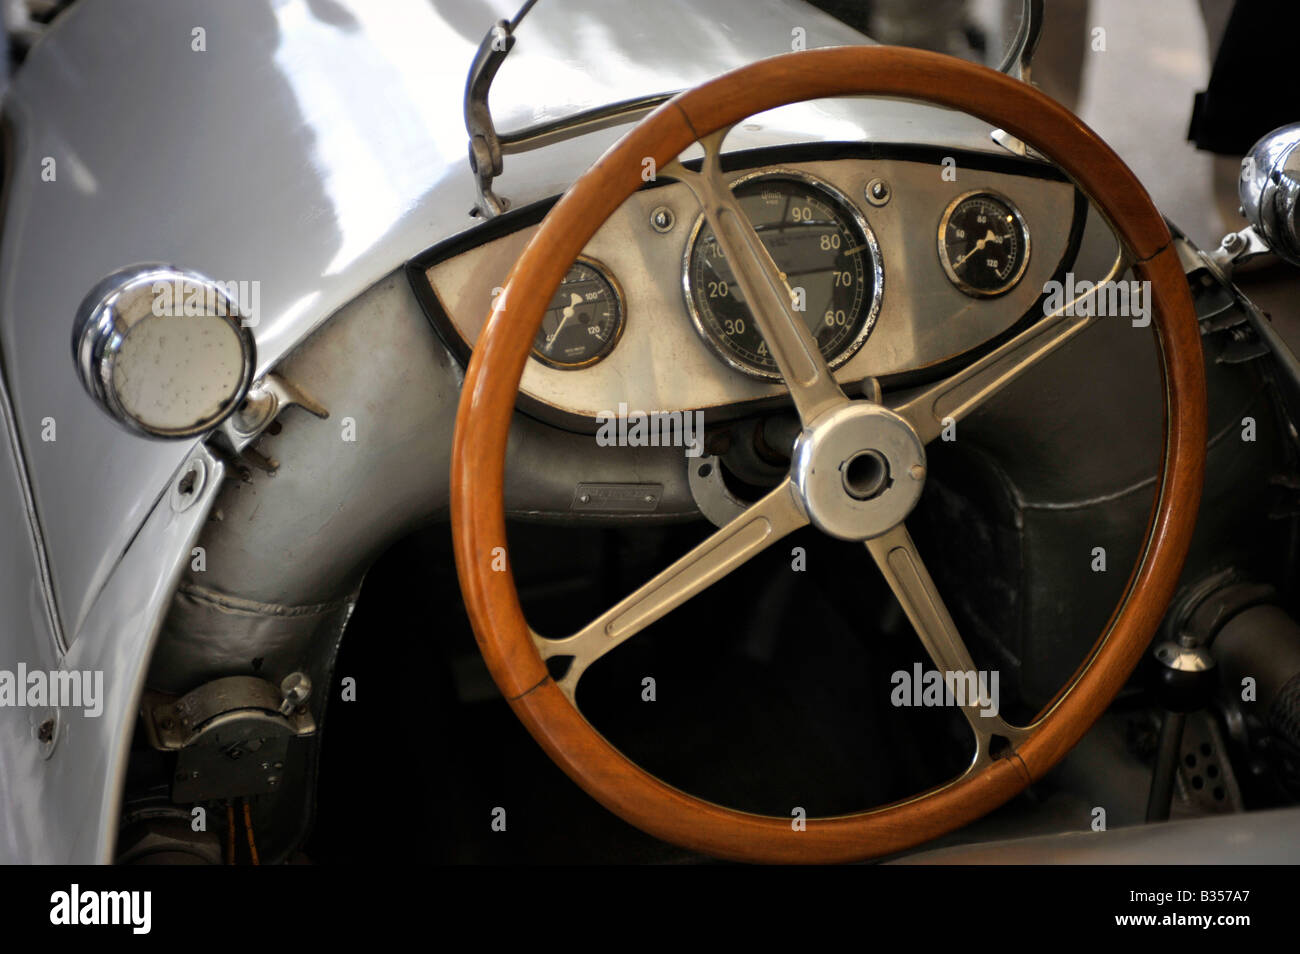 Panhard et Lavassor1908 Grand Prix car cockpit interior withwood rim steering wheel Stock Photo